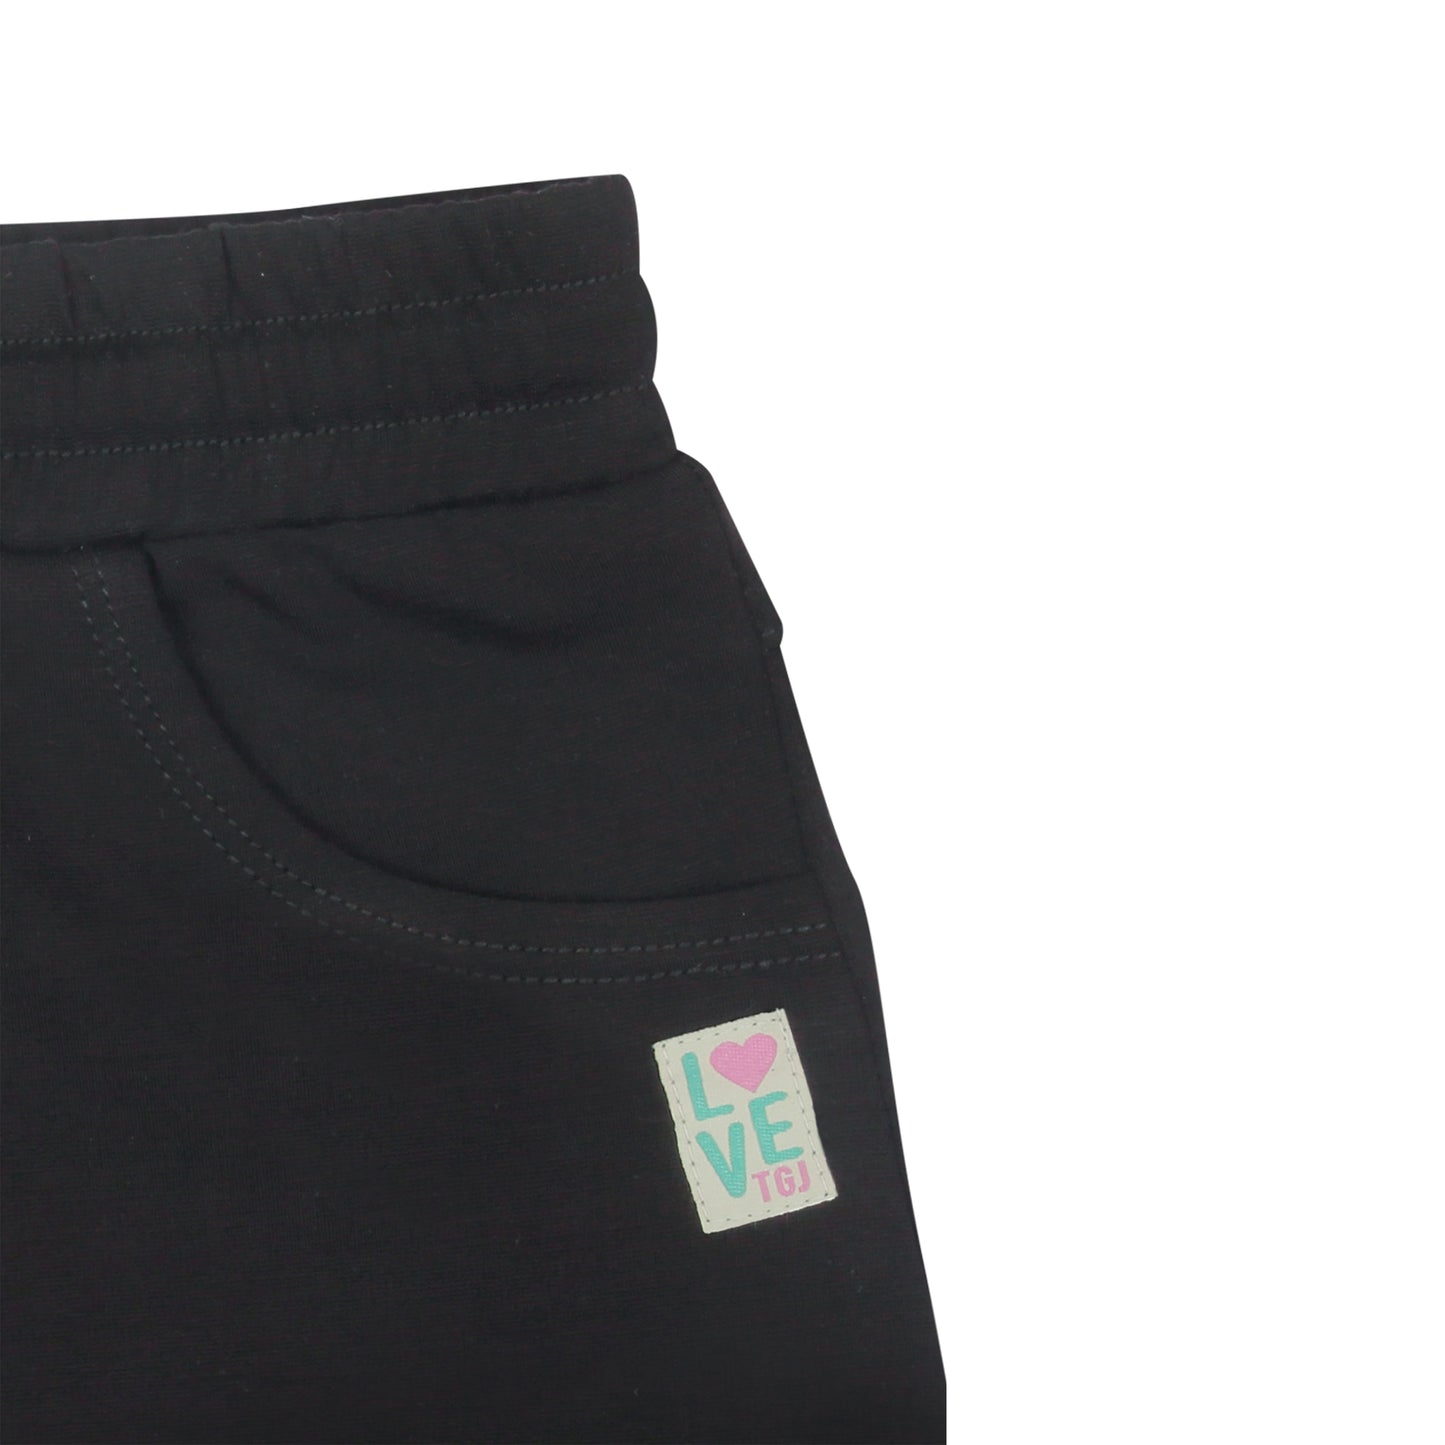 Regular Fit Basic Knitted Black Skirt With Pockets